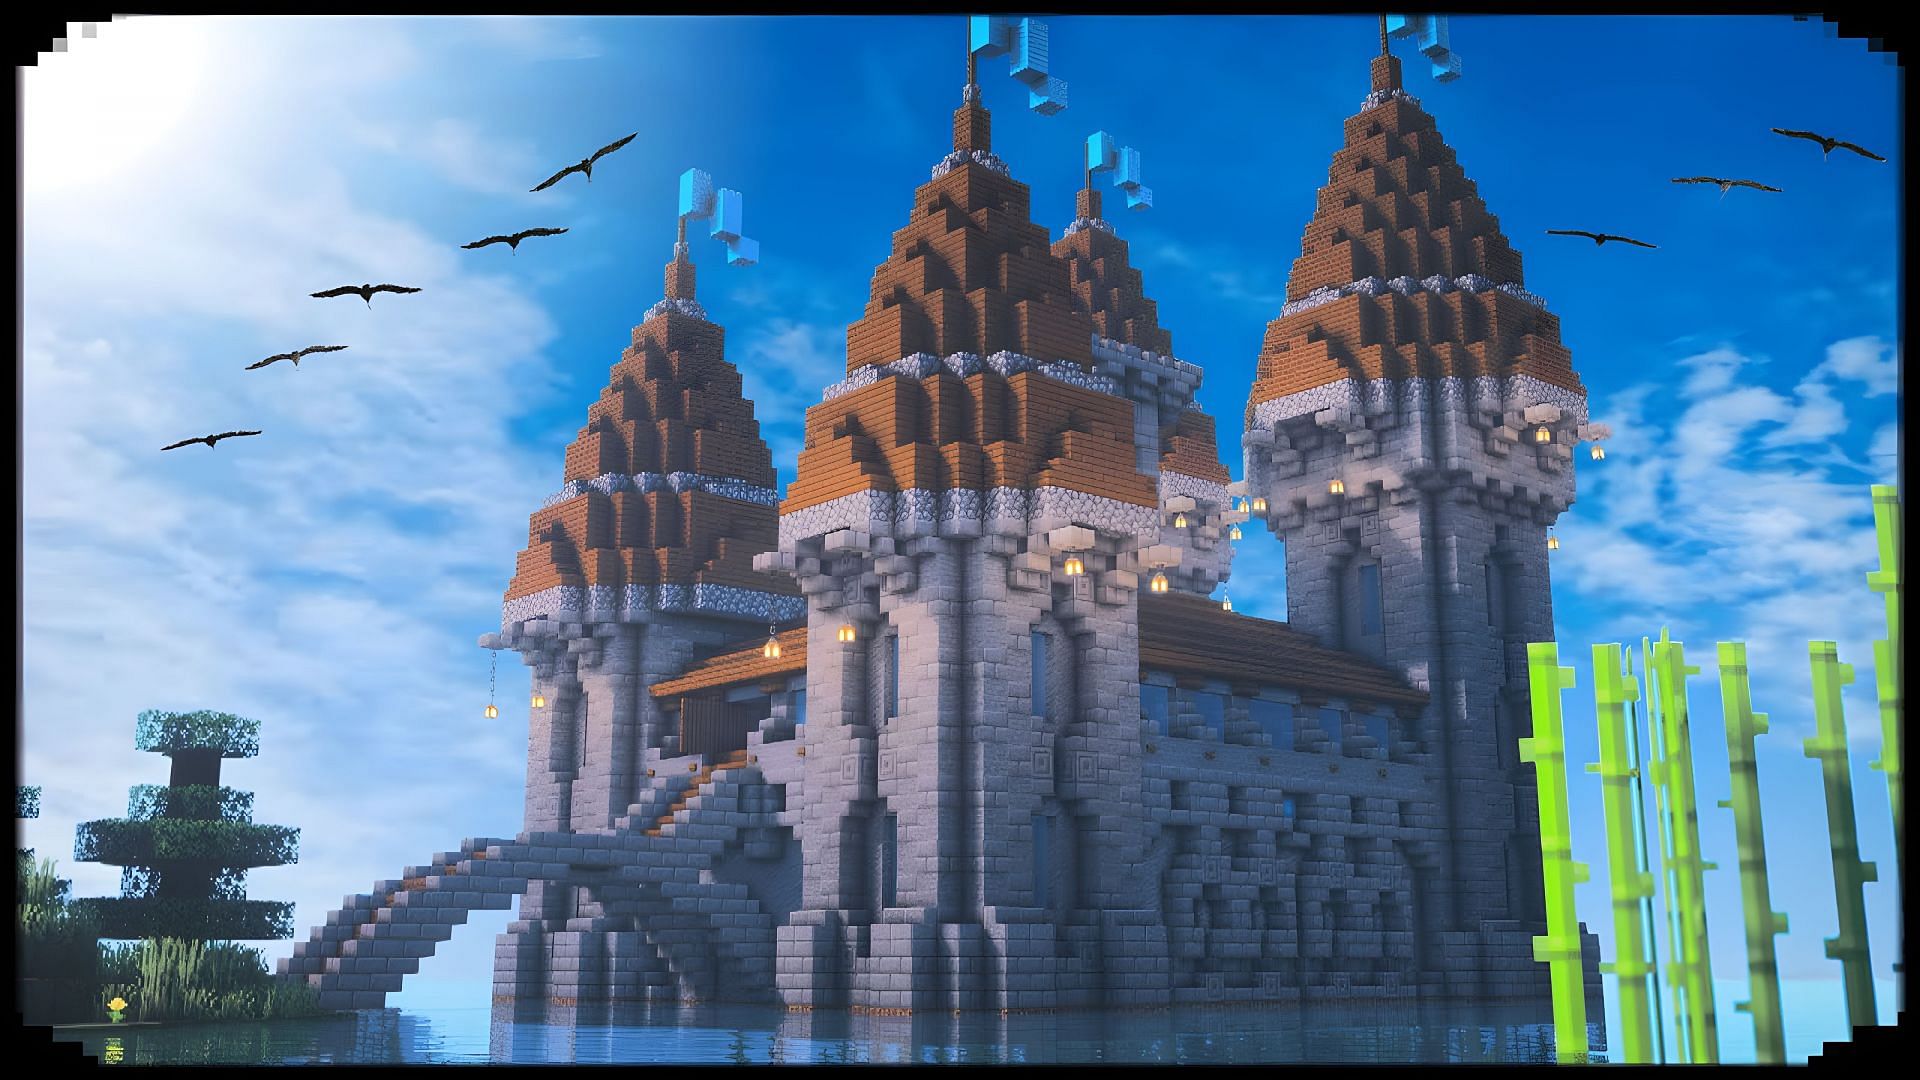 Minecraft castle builds are extrodainary (Image via Youtube/One Team)